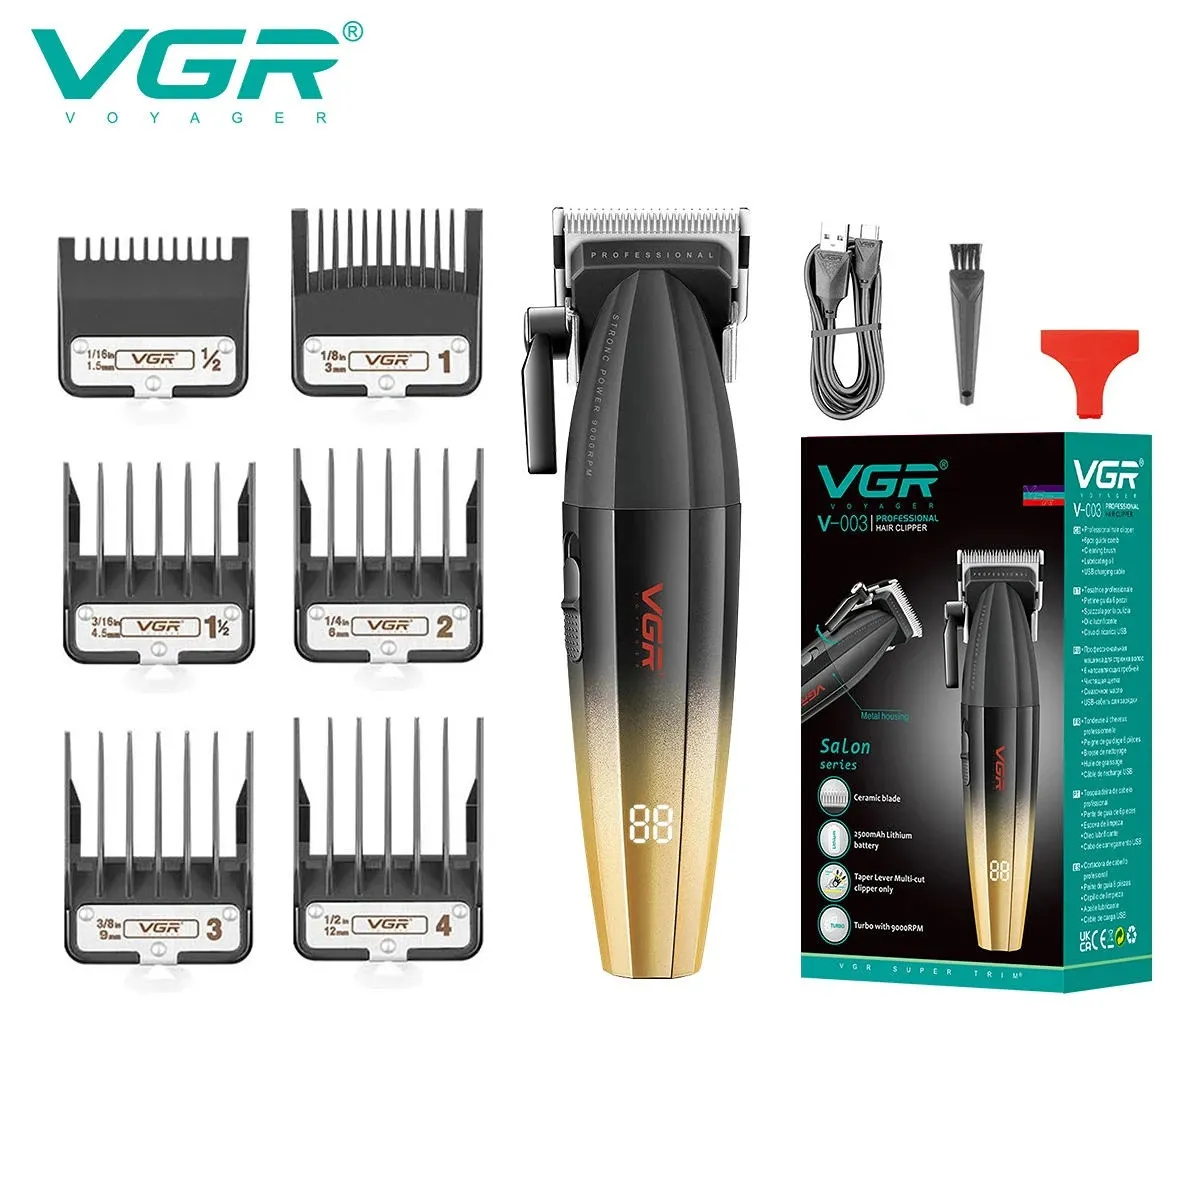 VGR Hair Clipper Professional Trimmer 9000 RPM Barber Cutting Machine Digital Display Haircut for Men V003 240411